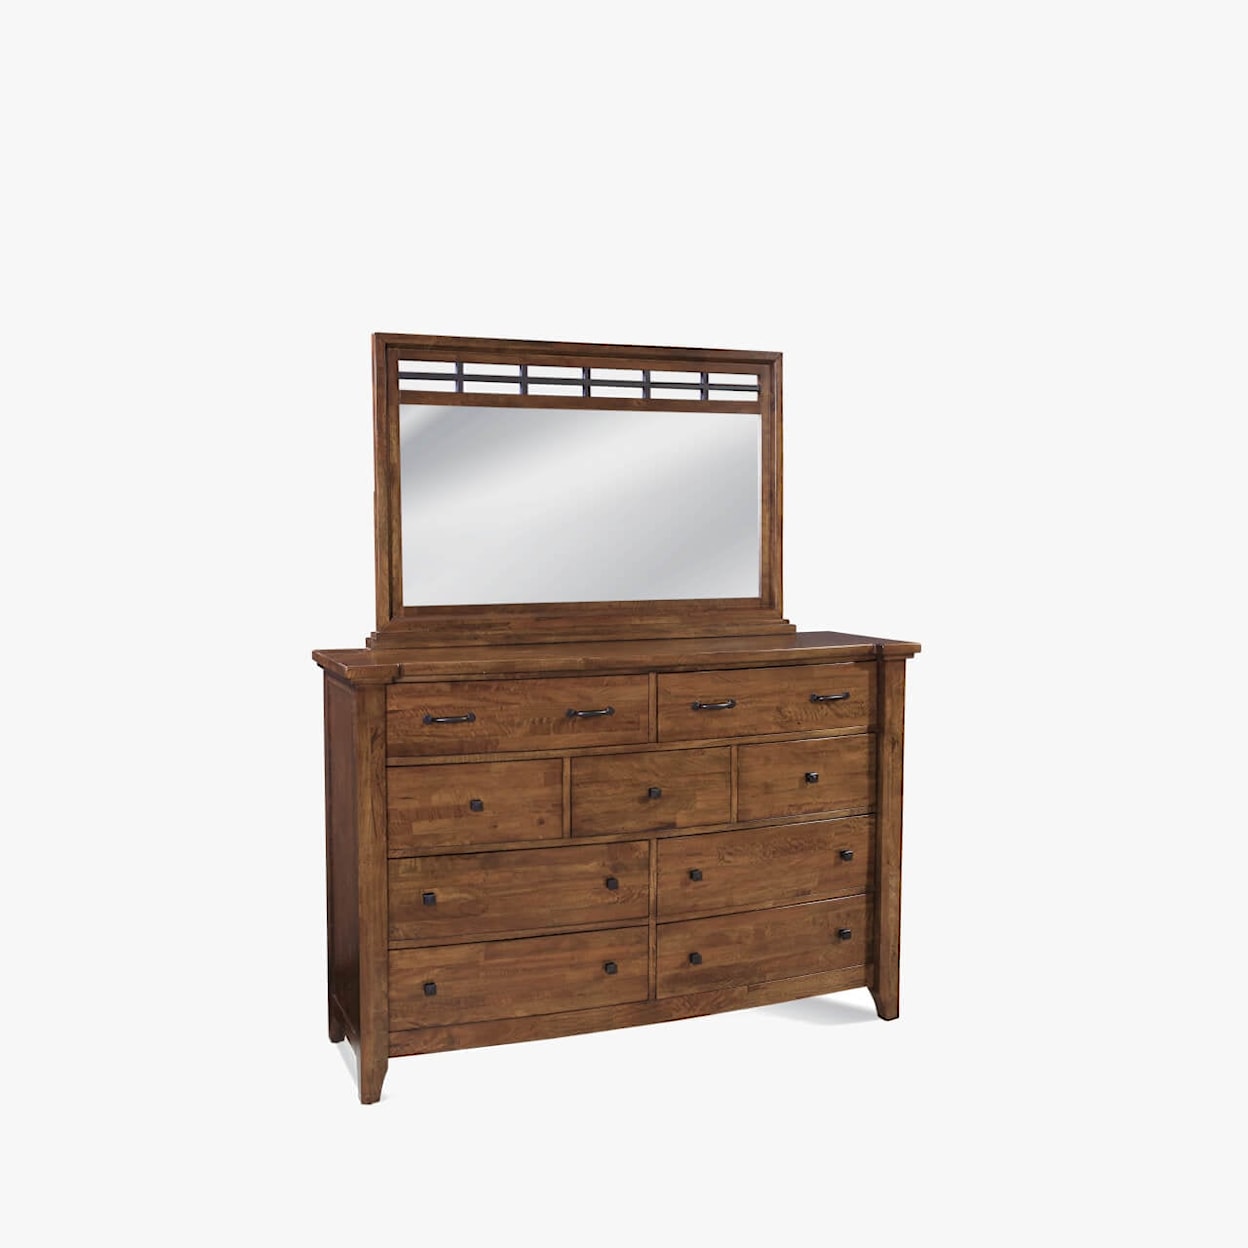 Virginia Furniture Market Solid Wood Whittier King Bedroom Group